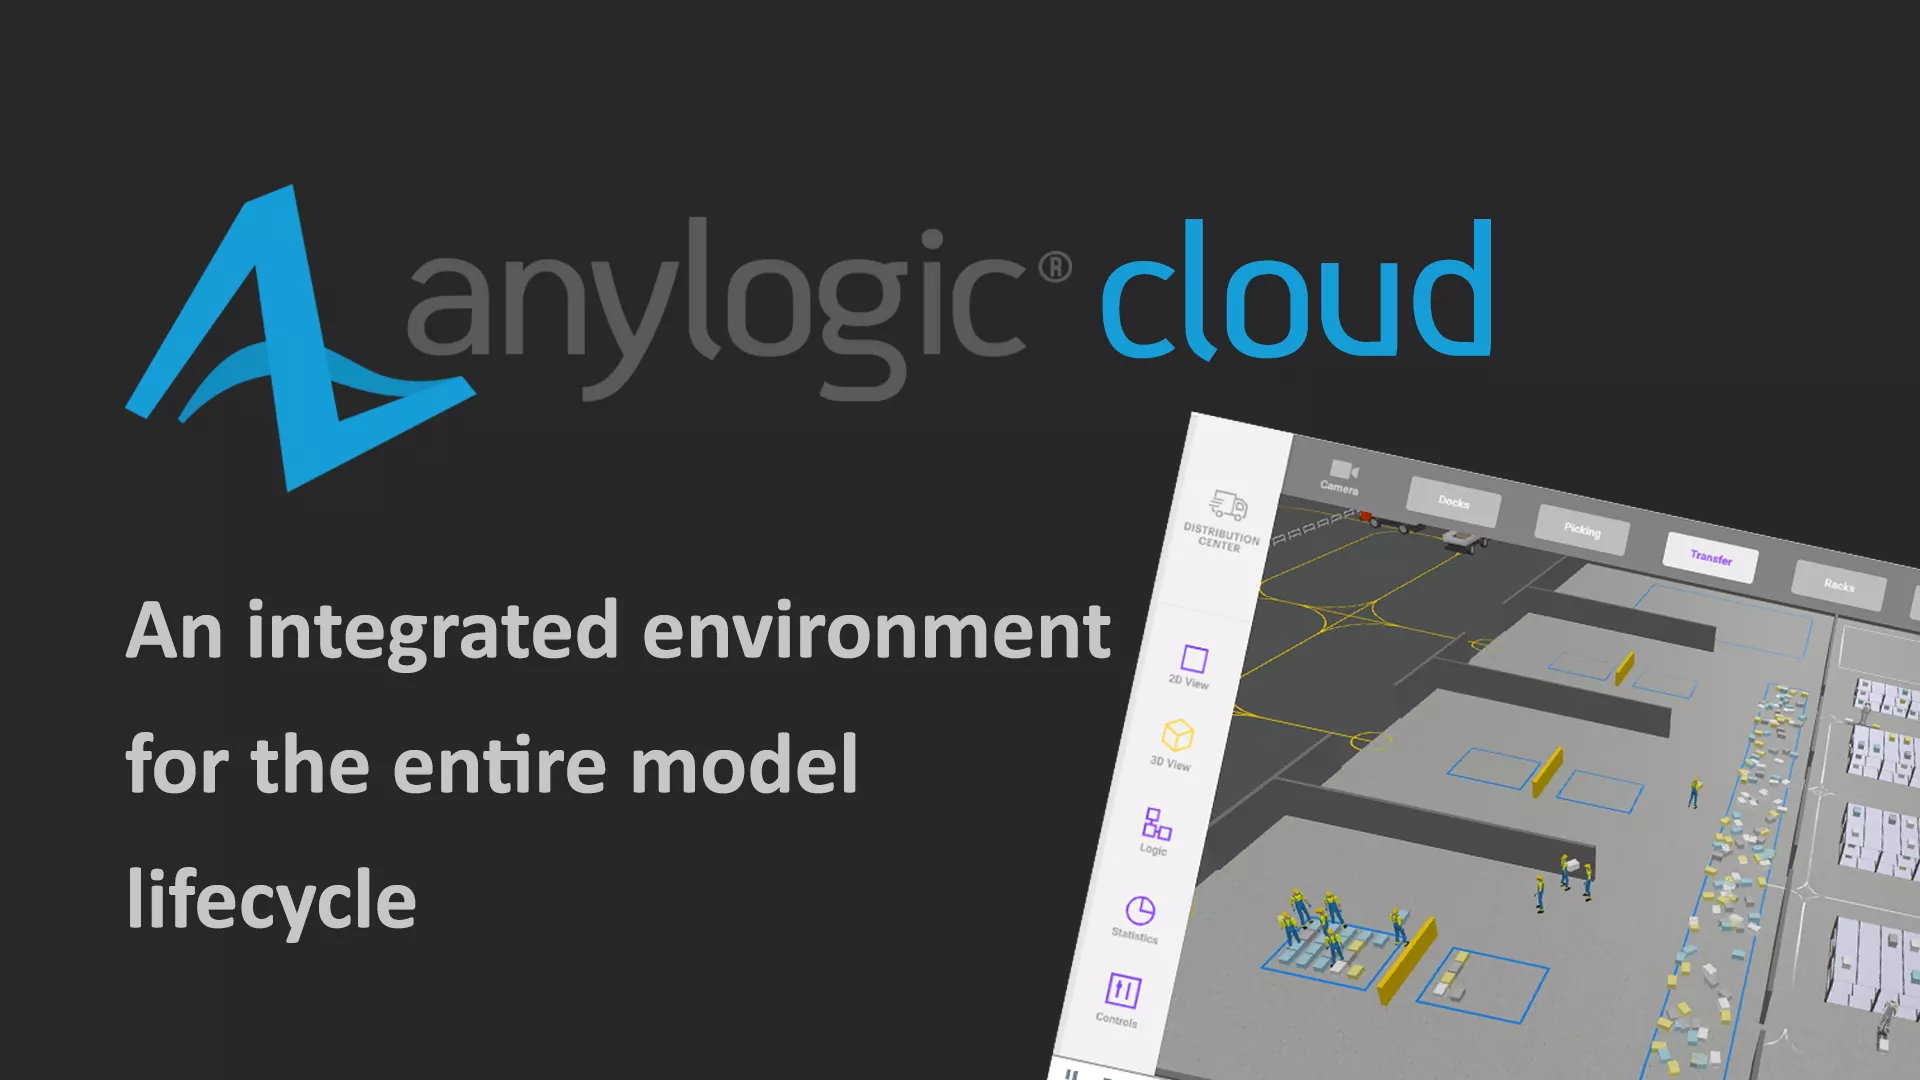 AnyLogic Cloud